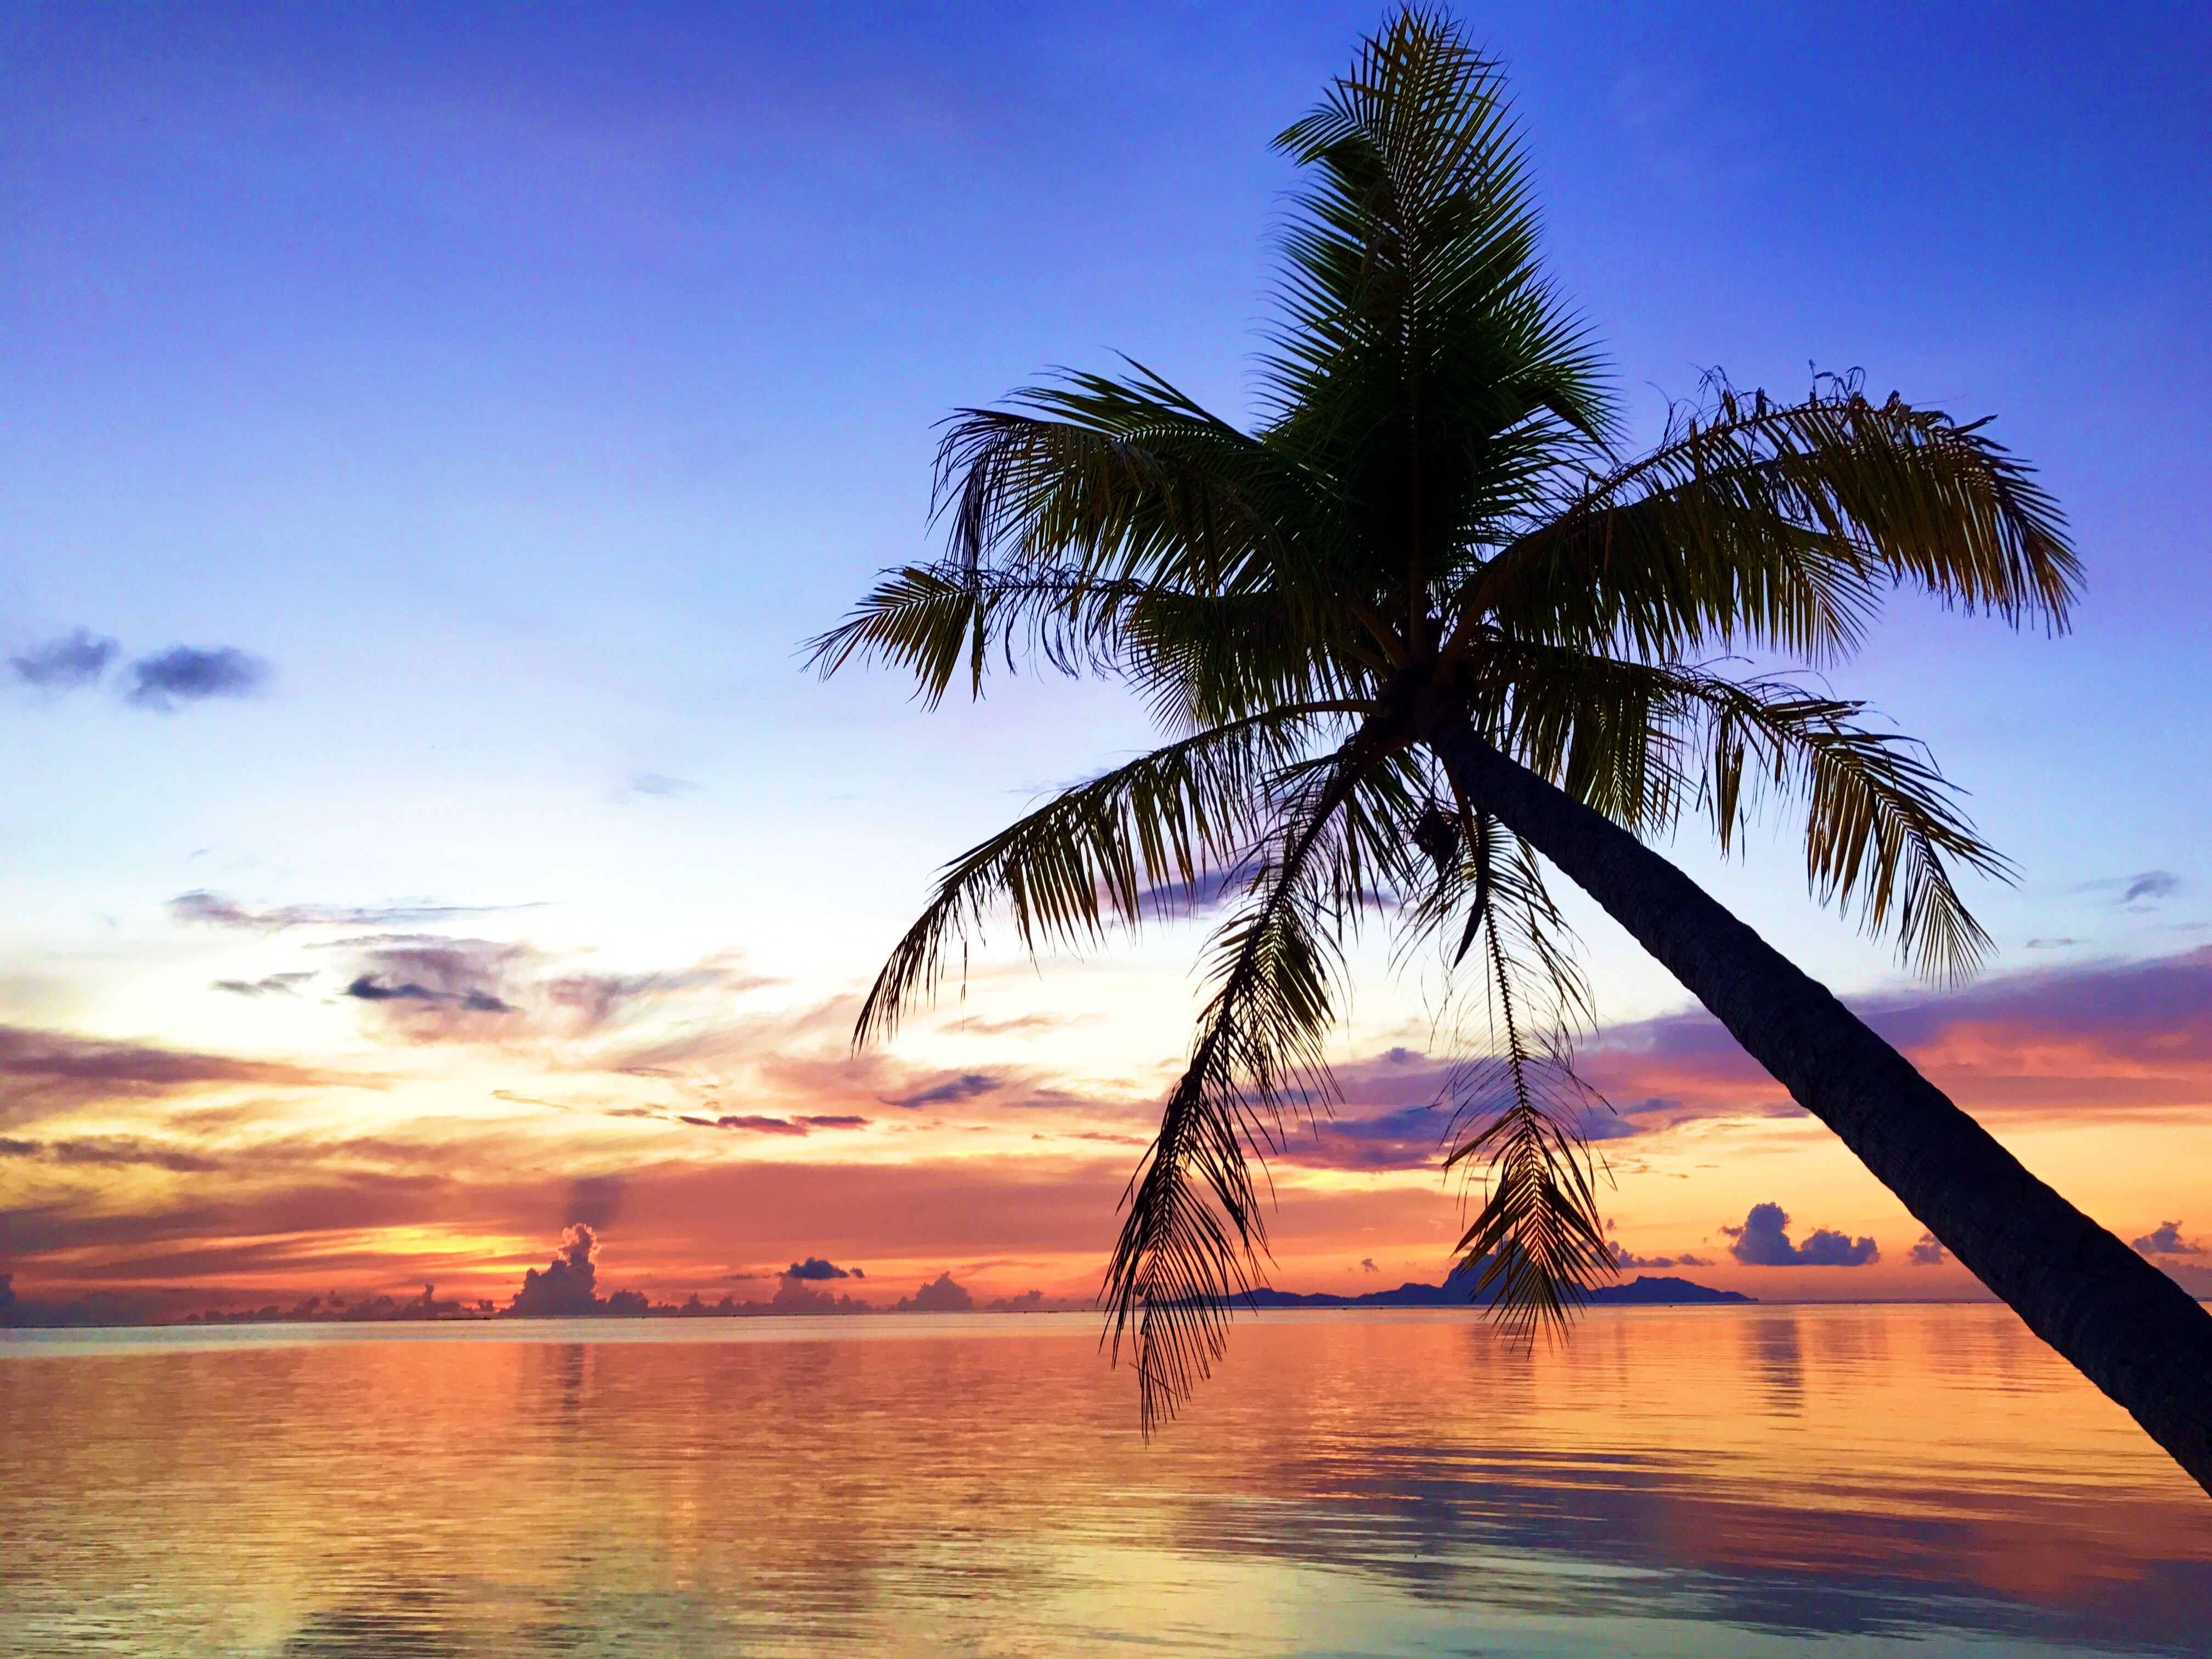 3 Days In Taha'a, Tahiti Trip 2018 - Tahiti Overwater Bungalow - Tahiti Itinerary - Best Places To Stay Tahiti - Tahaa - French Polynesia Vacation - Communikait by Kait Hanson